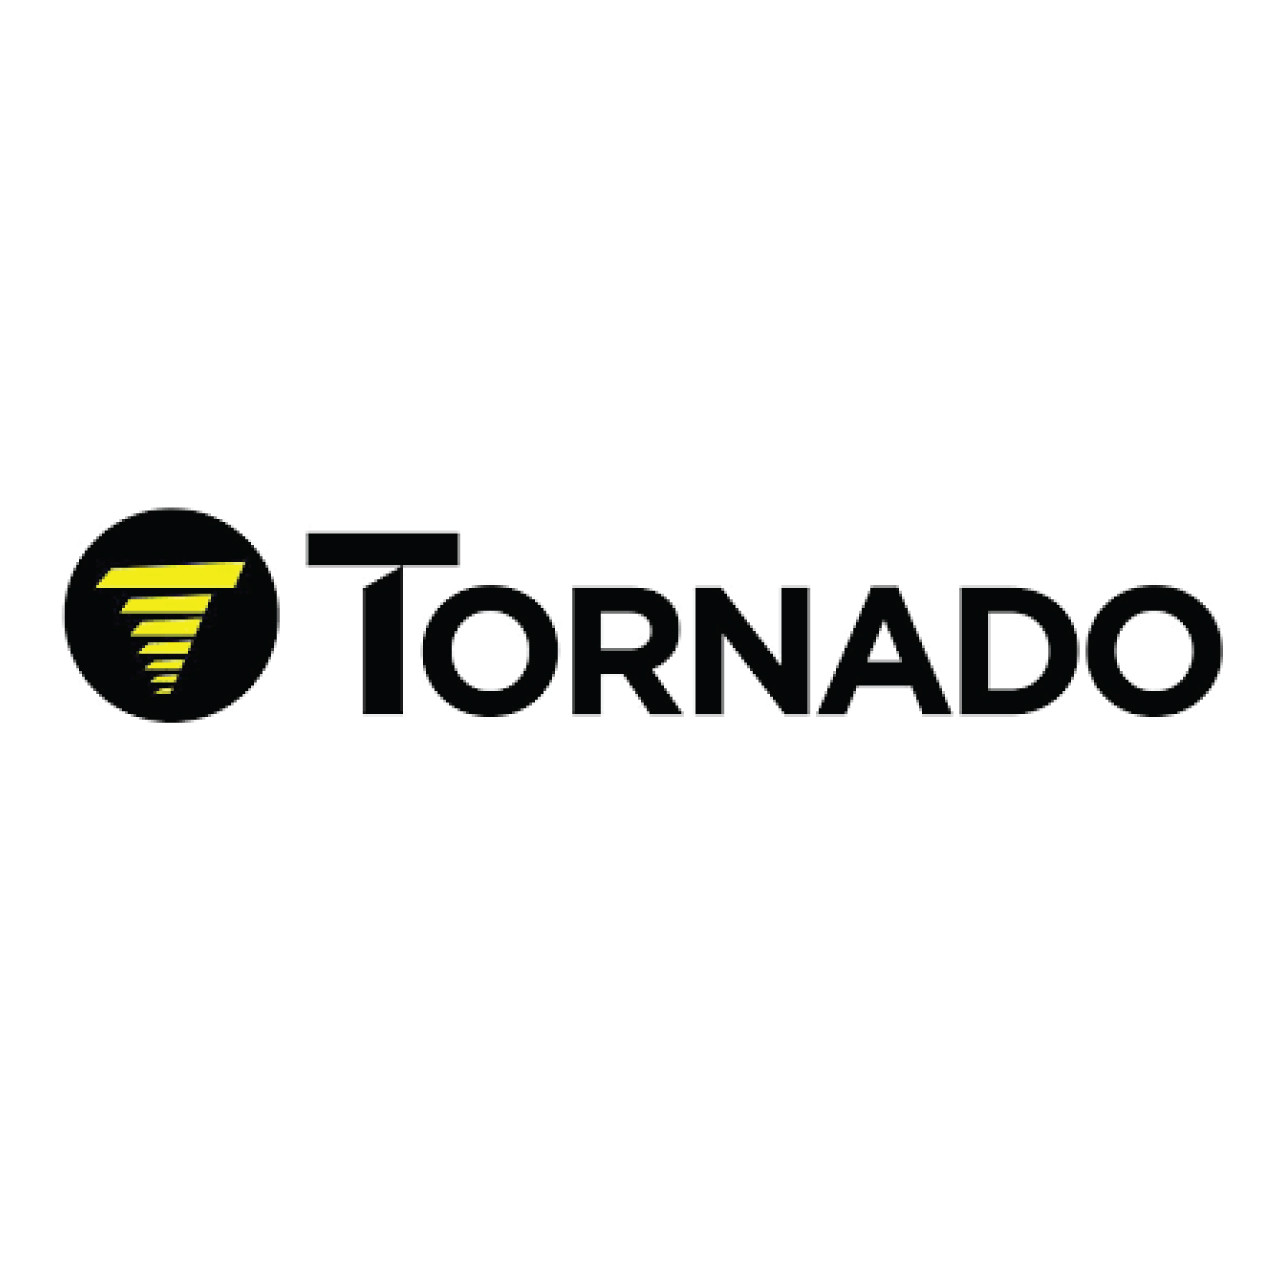 49330090, Tornado 49330090, Tornado Vacuum Motor, Tornado parts